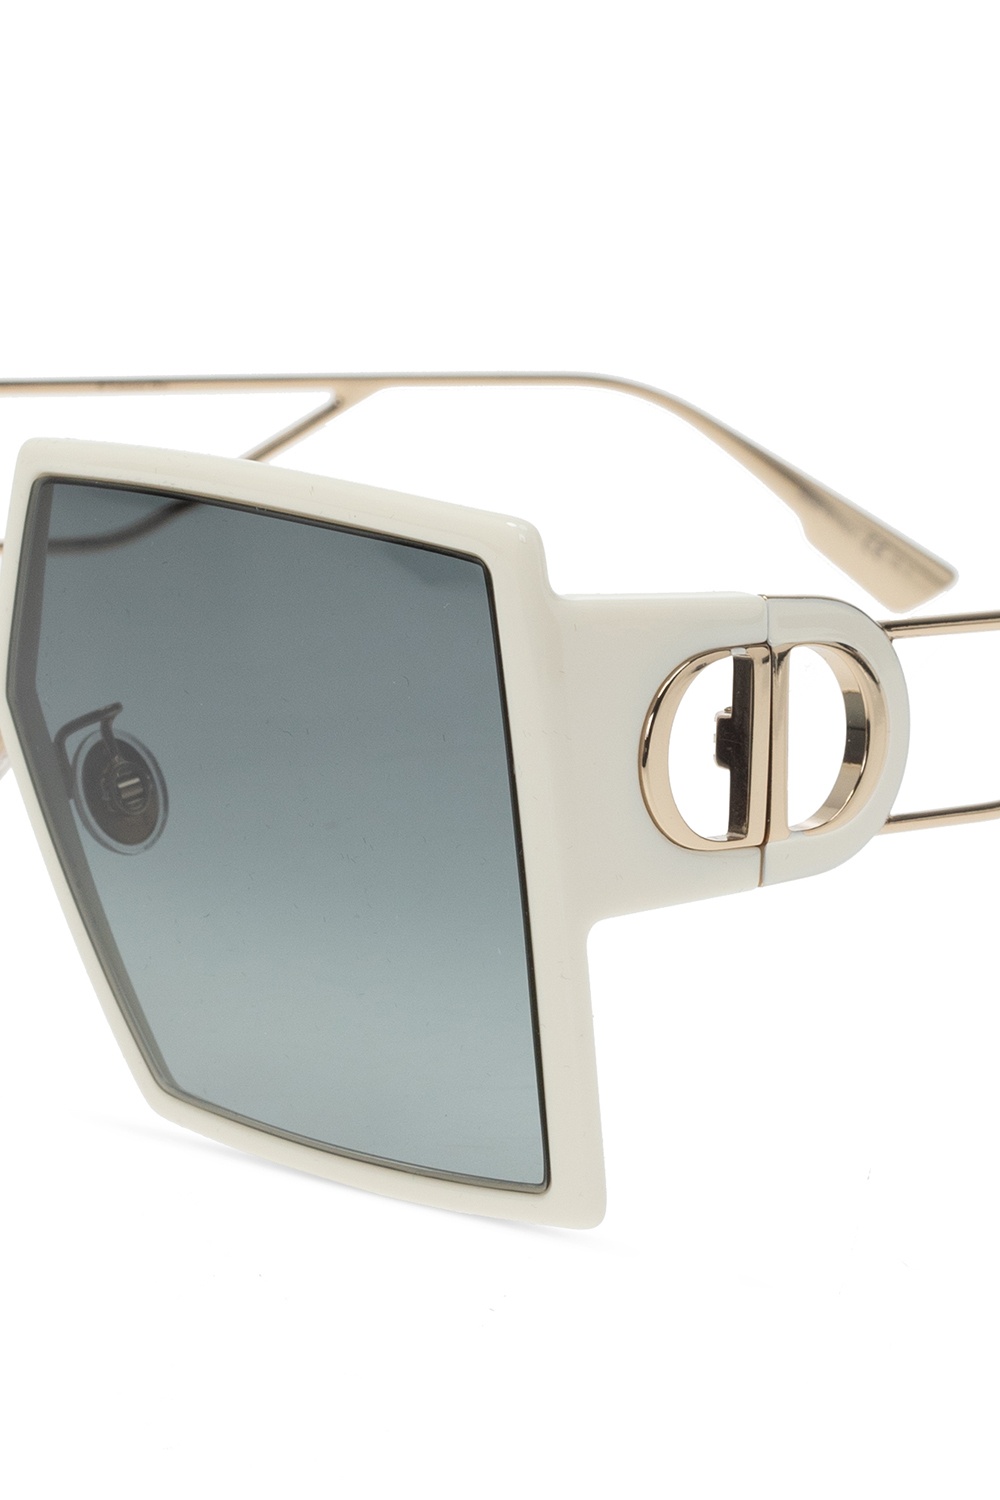 30 Montaigne S 3 U Square Sunglasses in Brown  Dior Eyewear  Mytheresa